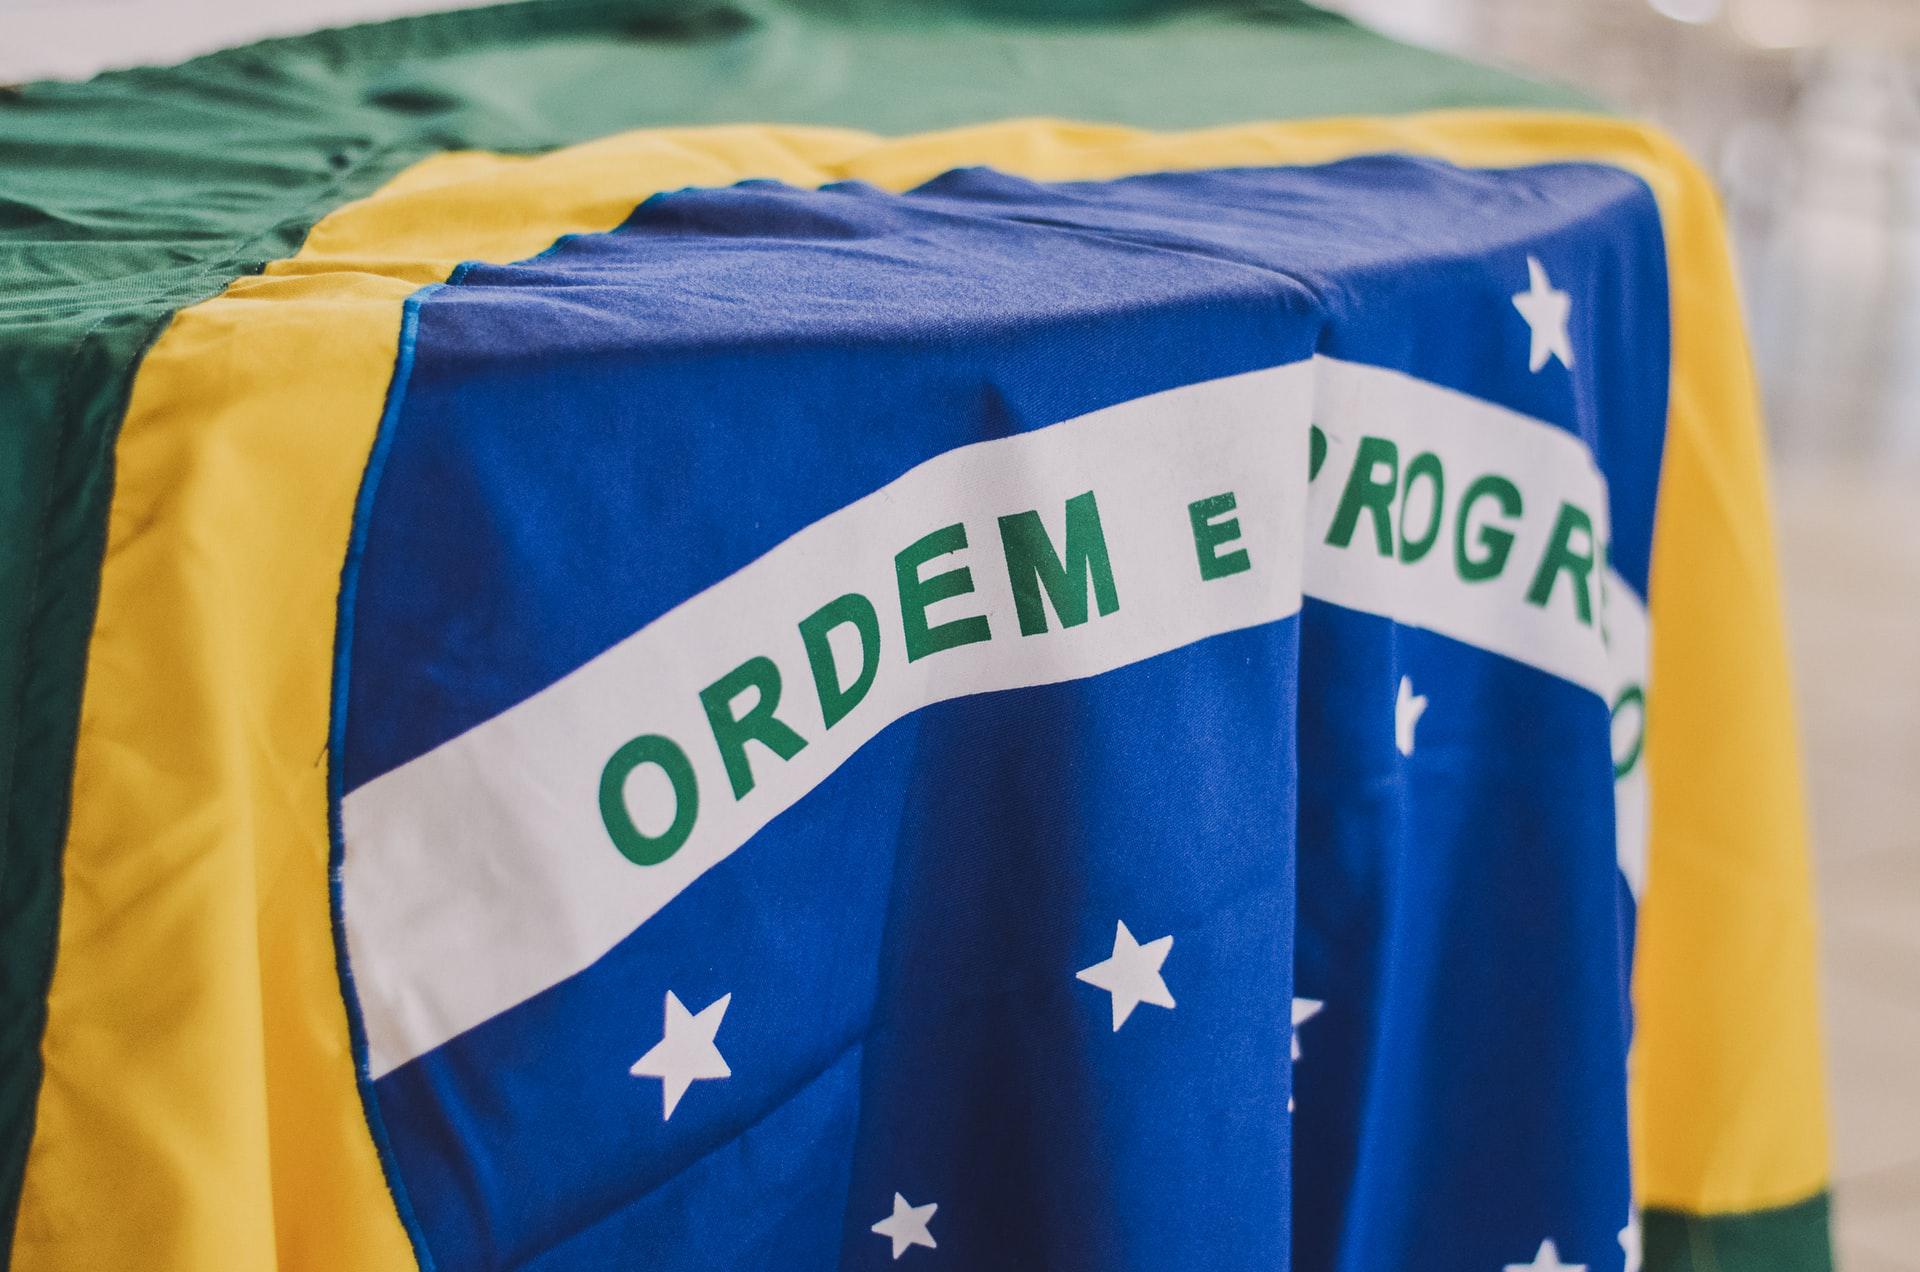 Cruzeiro do Sul is represented on many flags, including ours (Source: Unplash/Rafaela Biazi)